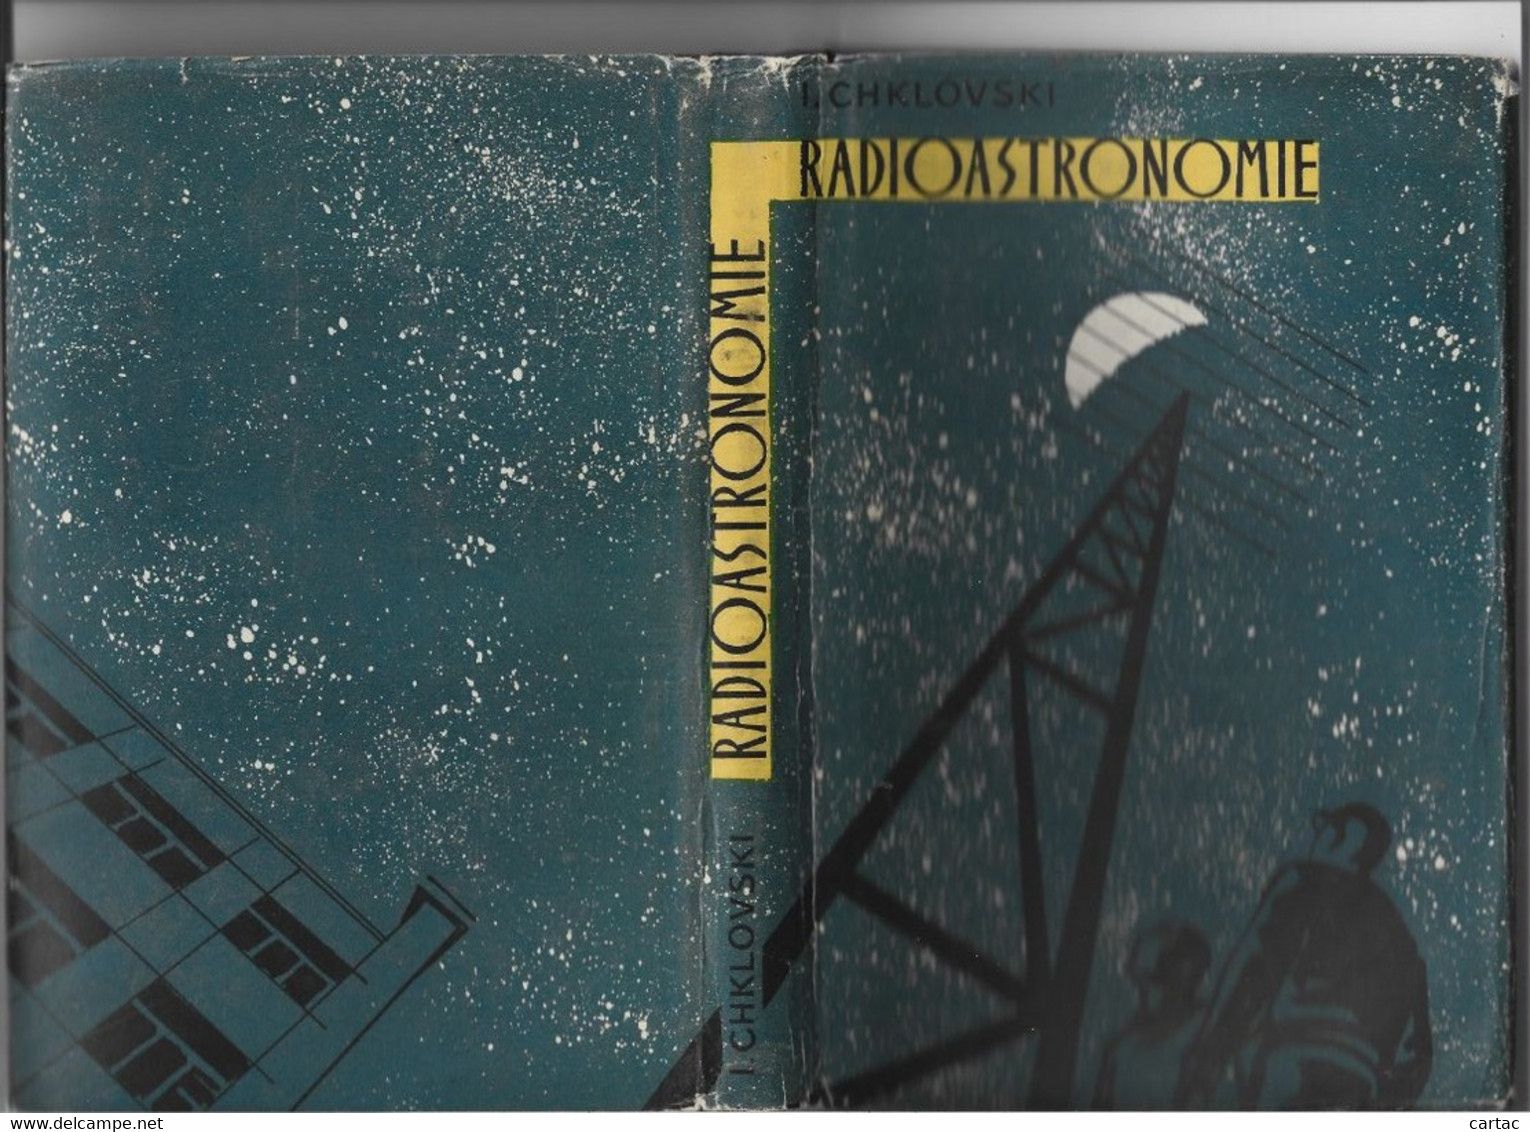 RADIOASTRONOMIE.  I. CHKLOSKI. 1958. - Astronomie